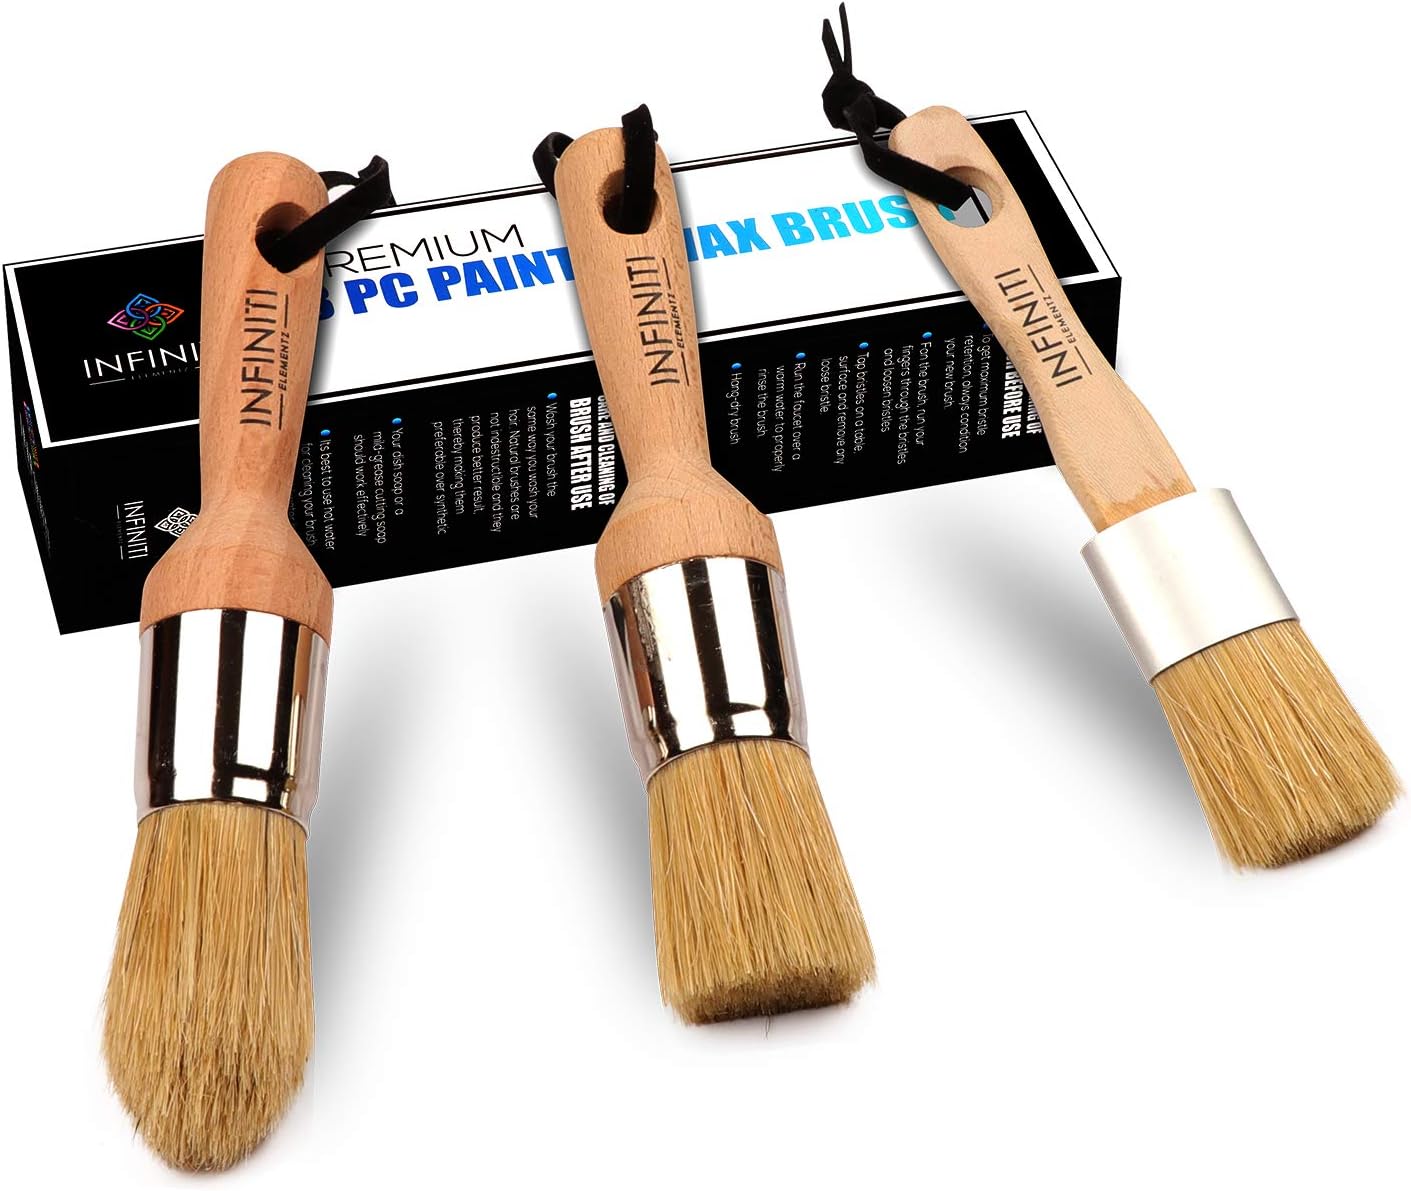 Professional Chalk and Wax Paint Brush 3PC Set!!!! [...]